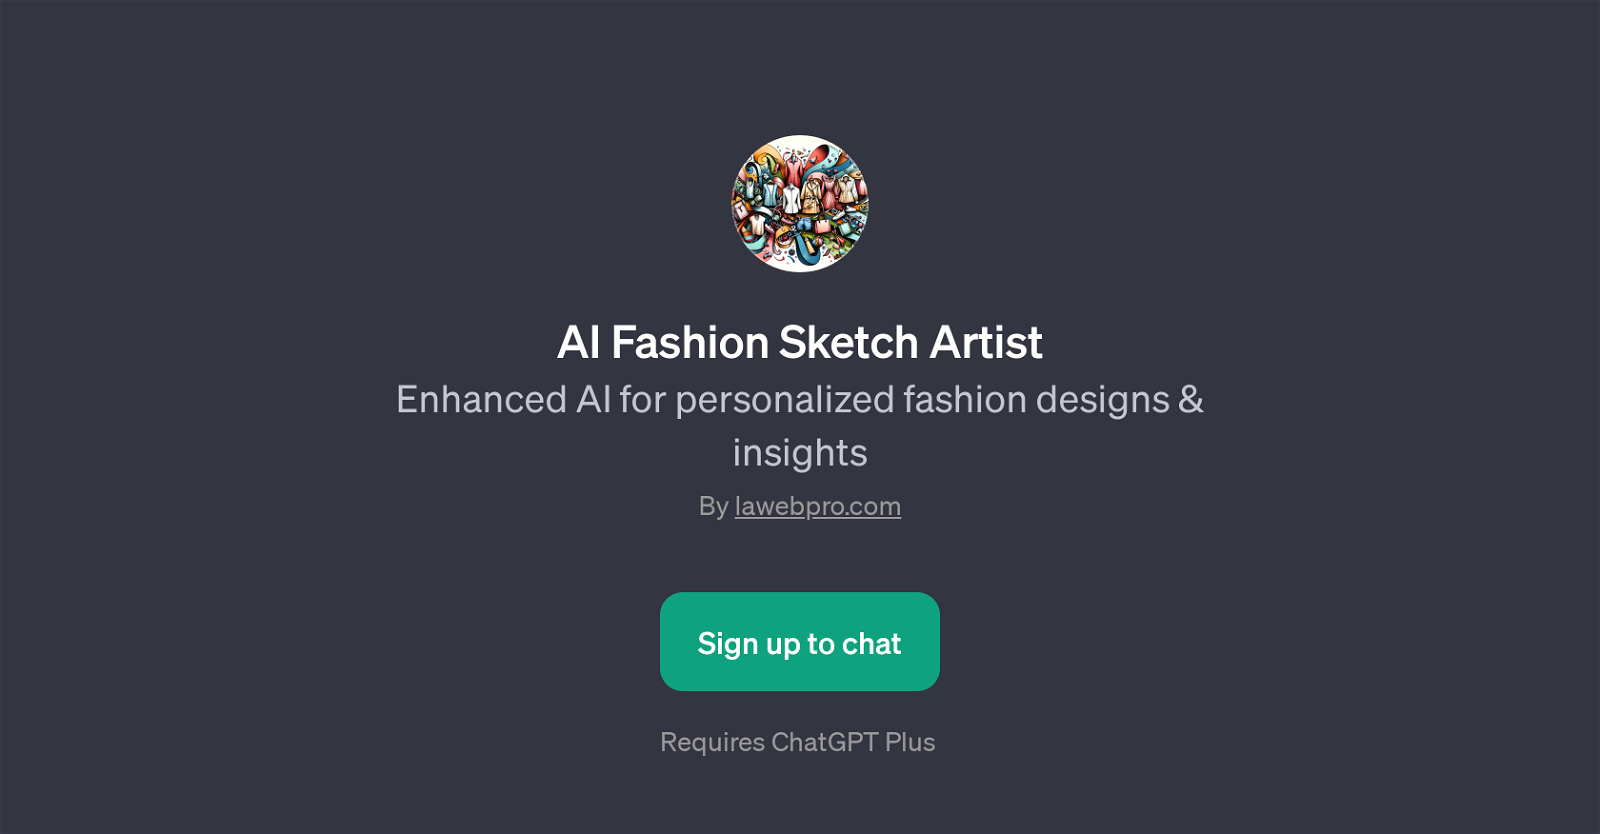 AI Fashion Sketch Artist website